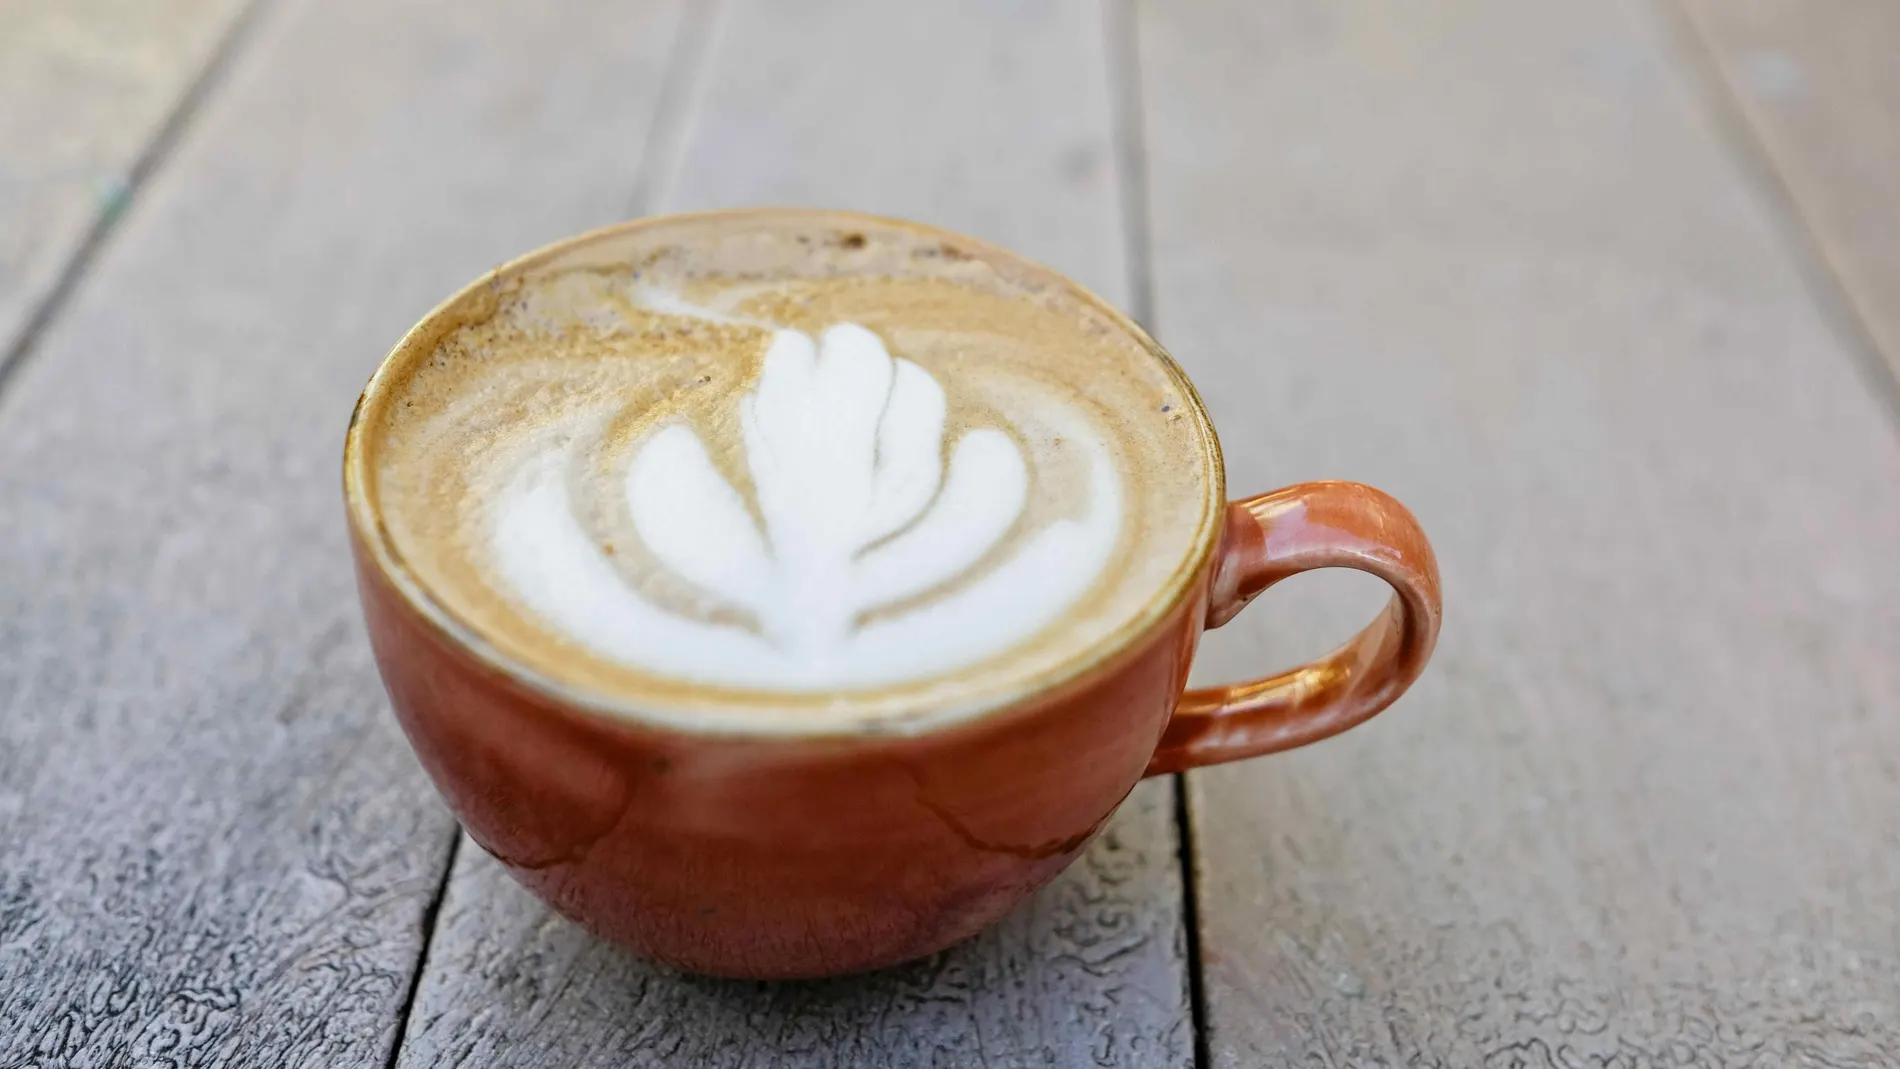 Un proyecto de ley sobre el origen del café abre una polémica en Costa Rica